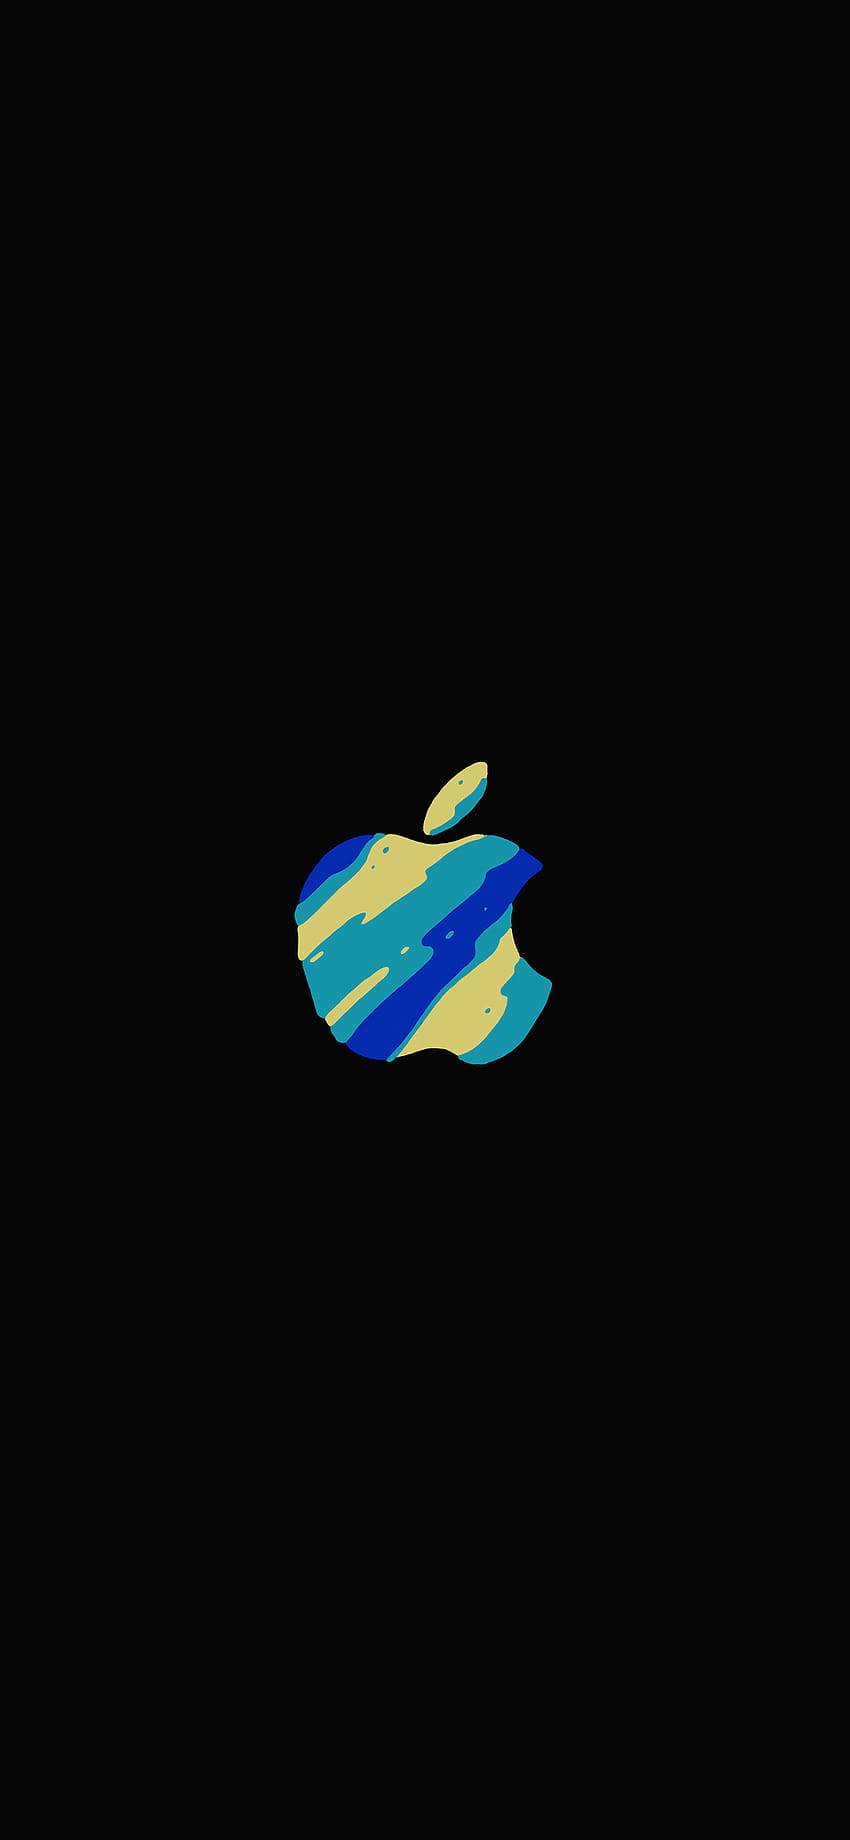 Logotipo de Apple para iPhone X, 8, 7, 6, logotipo de Apple iPhone fondo de pantalla del teléfono